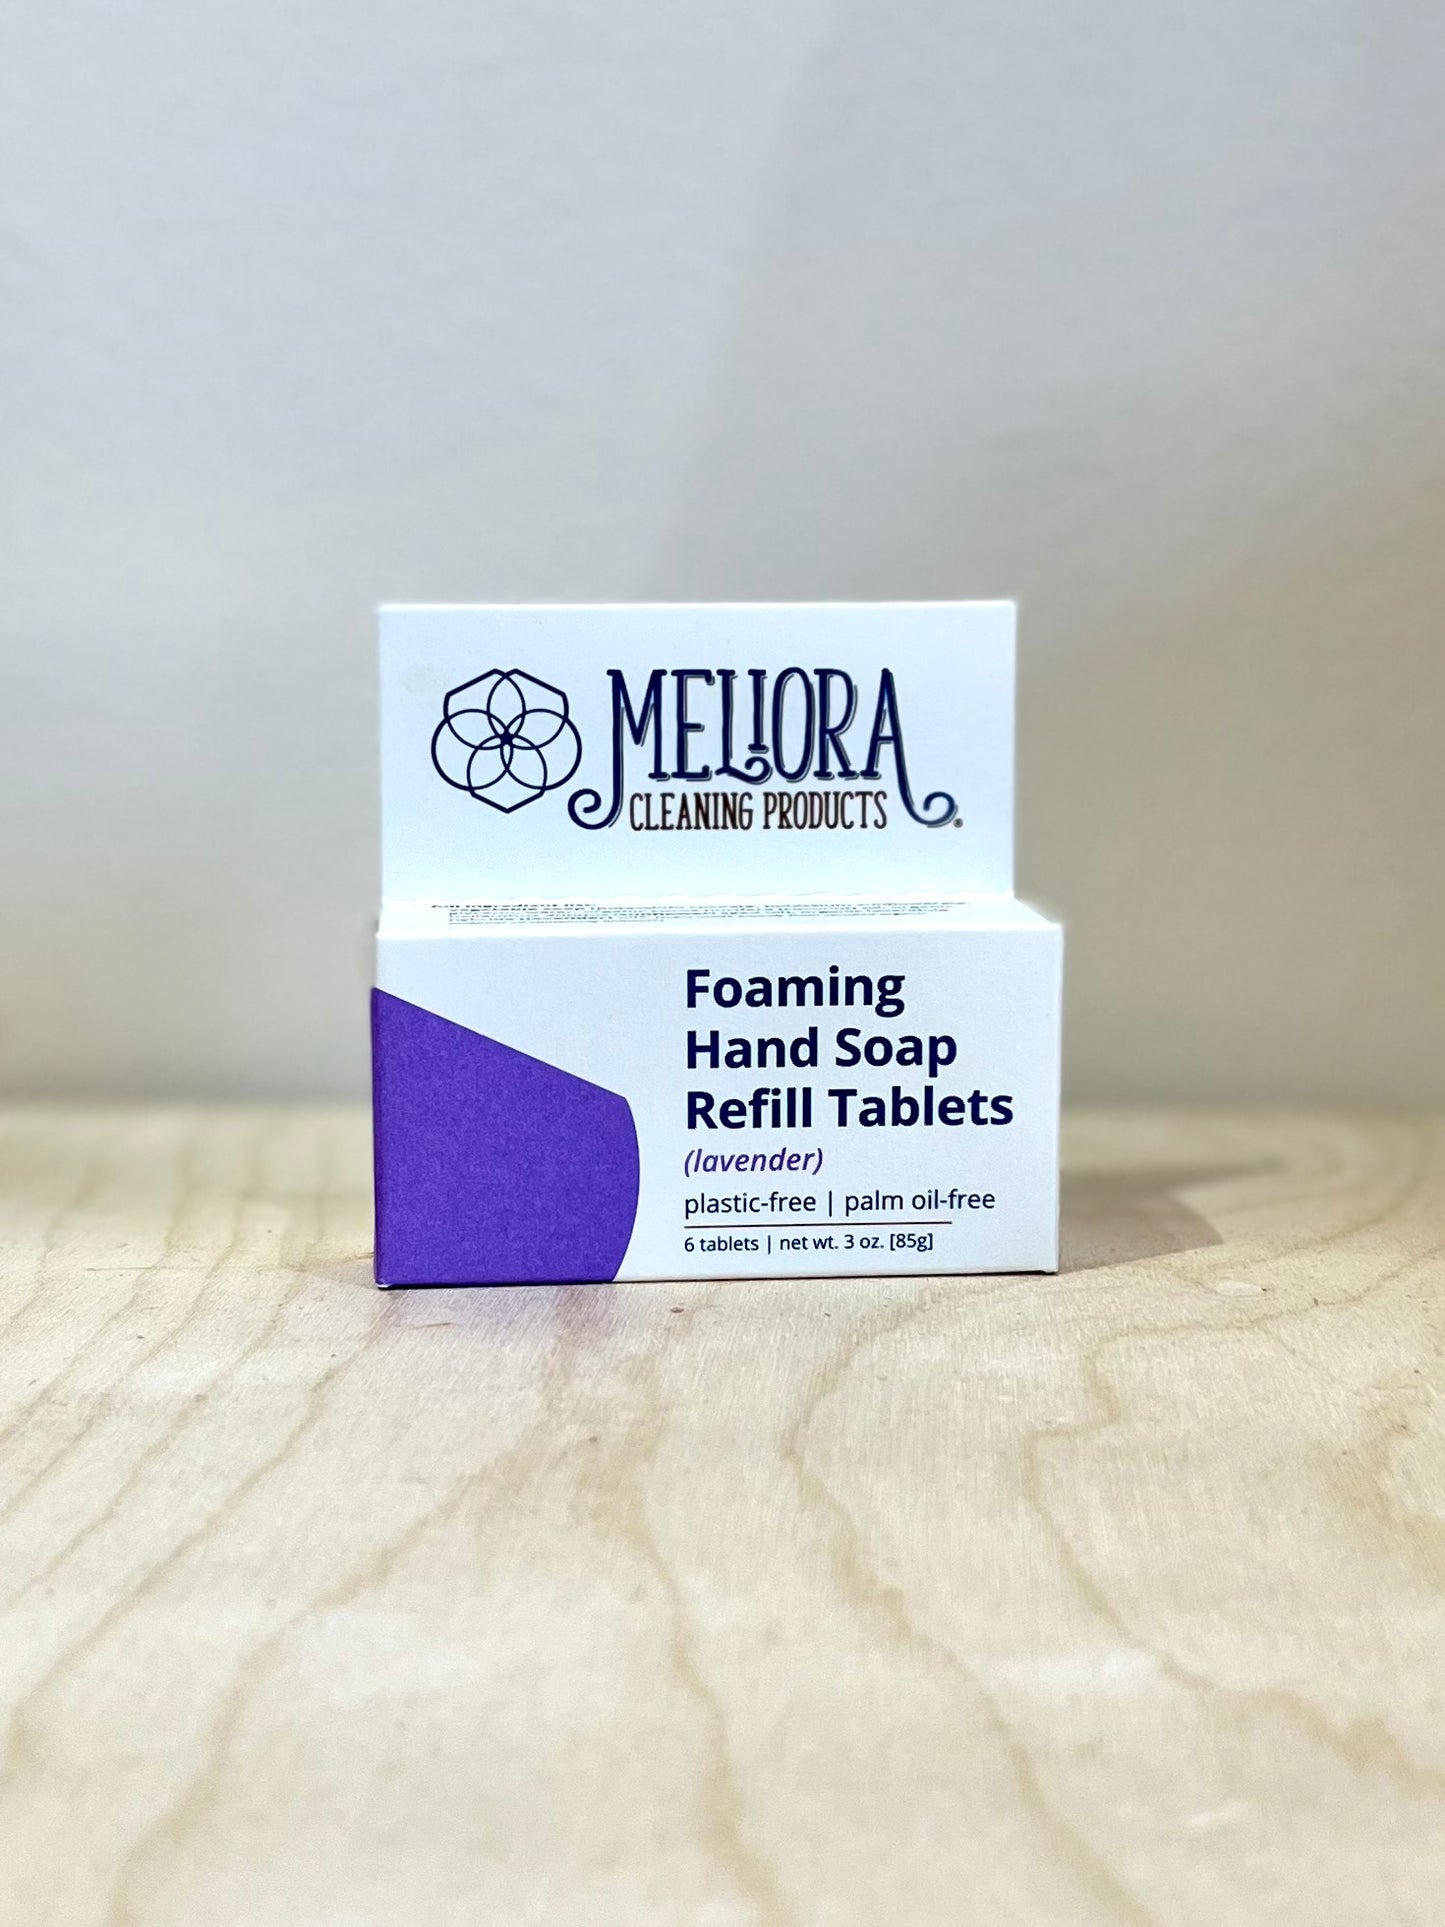 Foaming Hand Soap Refill Tablets - Lavender Meliora